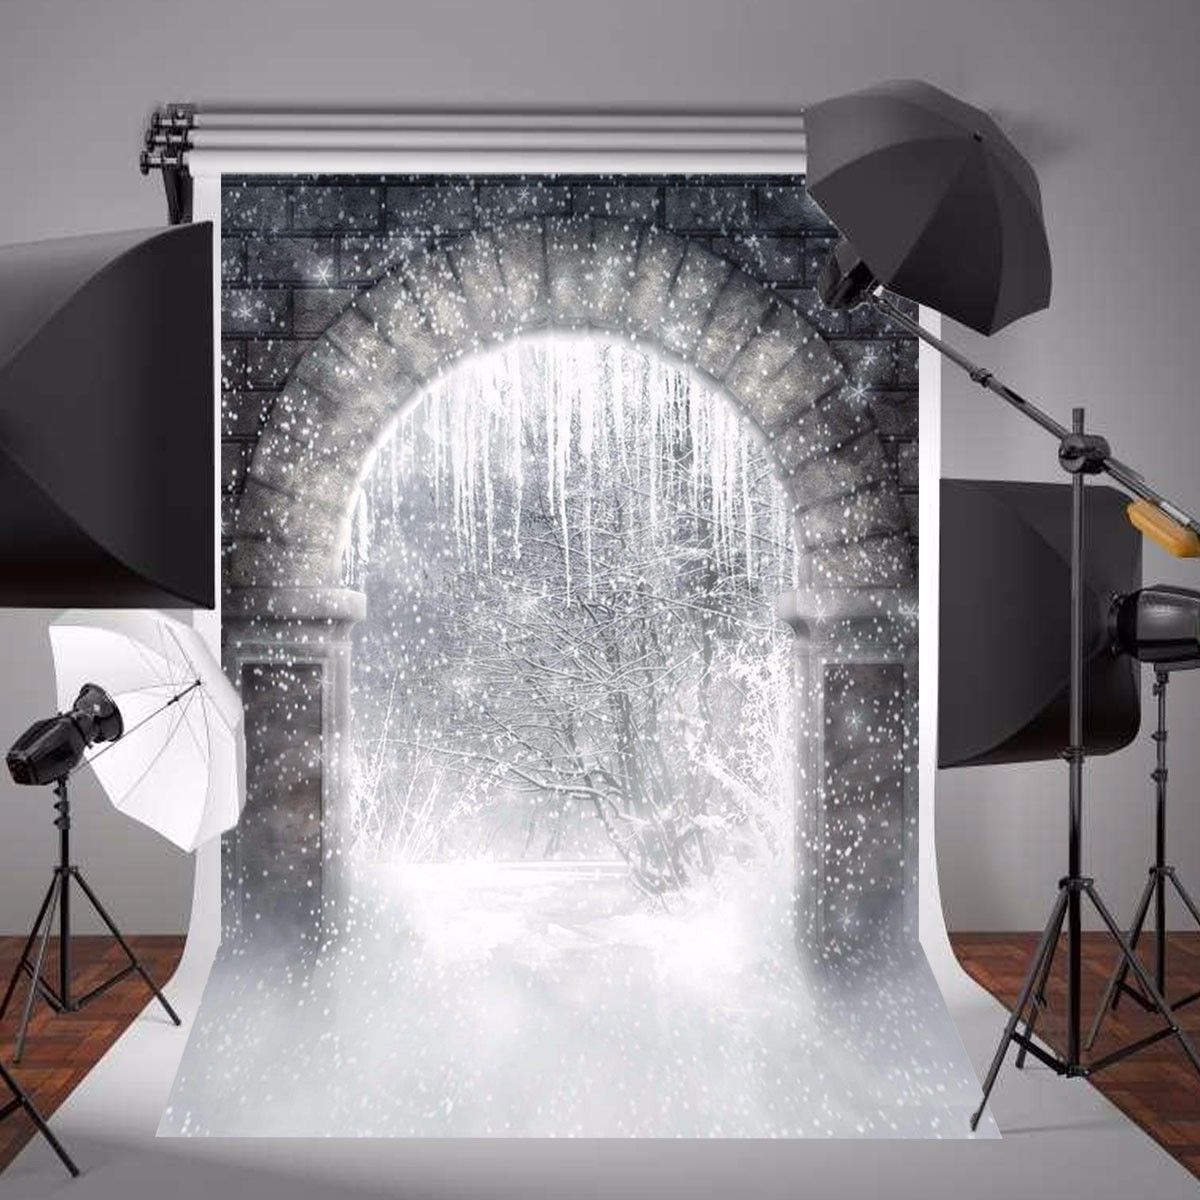 Snow-Forest-Archway-Magic-World-Theme-Photography-Vinyl-Backdrop-Studio-Background-21m-x-15m-1277793